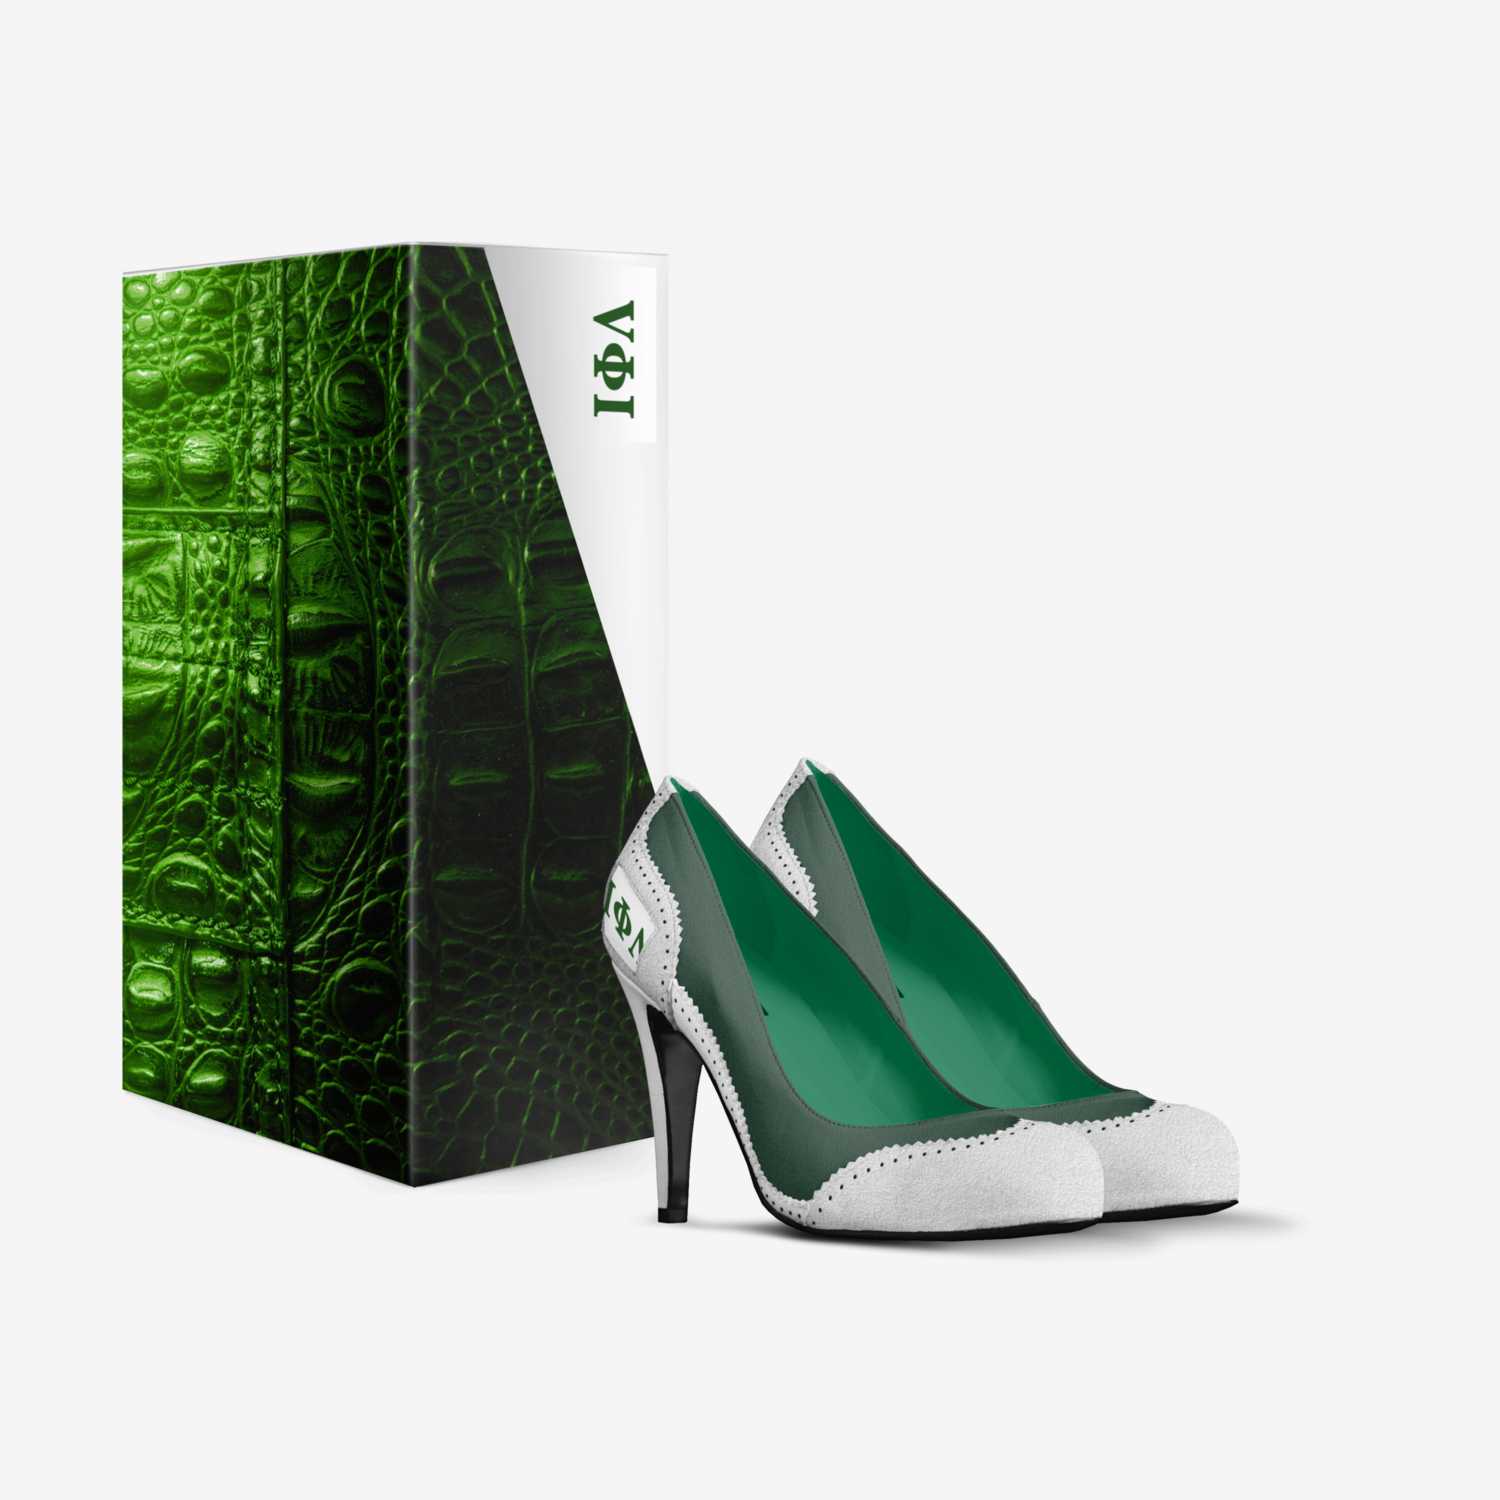 Iota Lady N5 custom made in Italy shoes by Chana Brooks | Box view